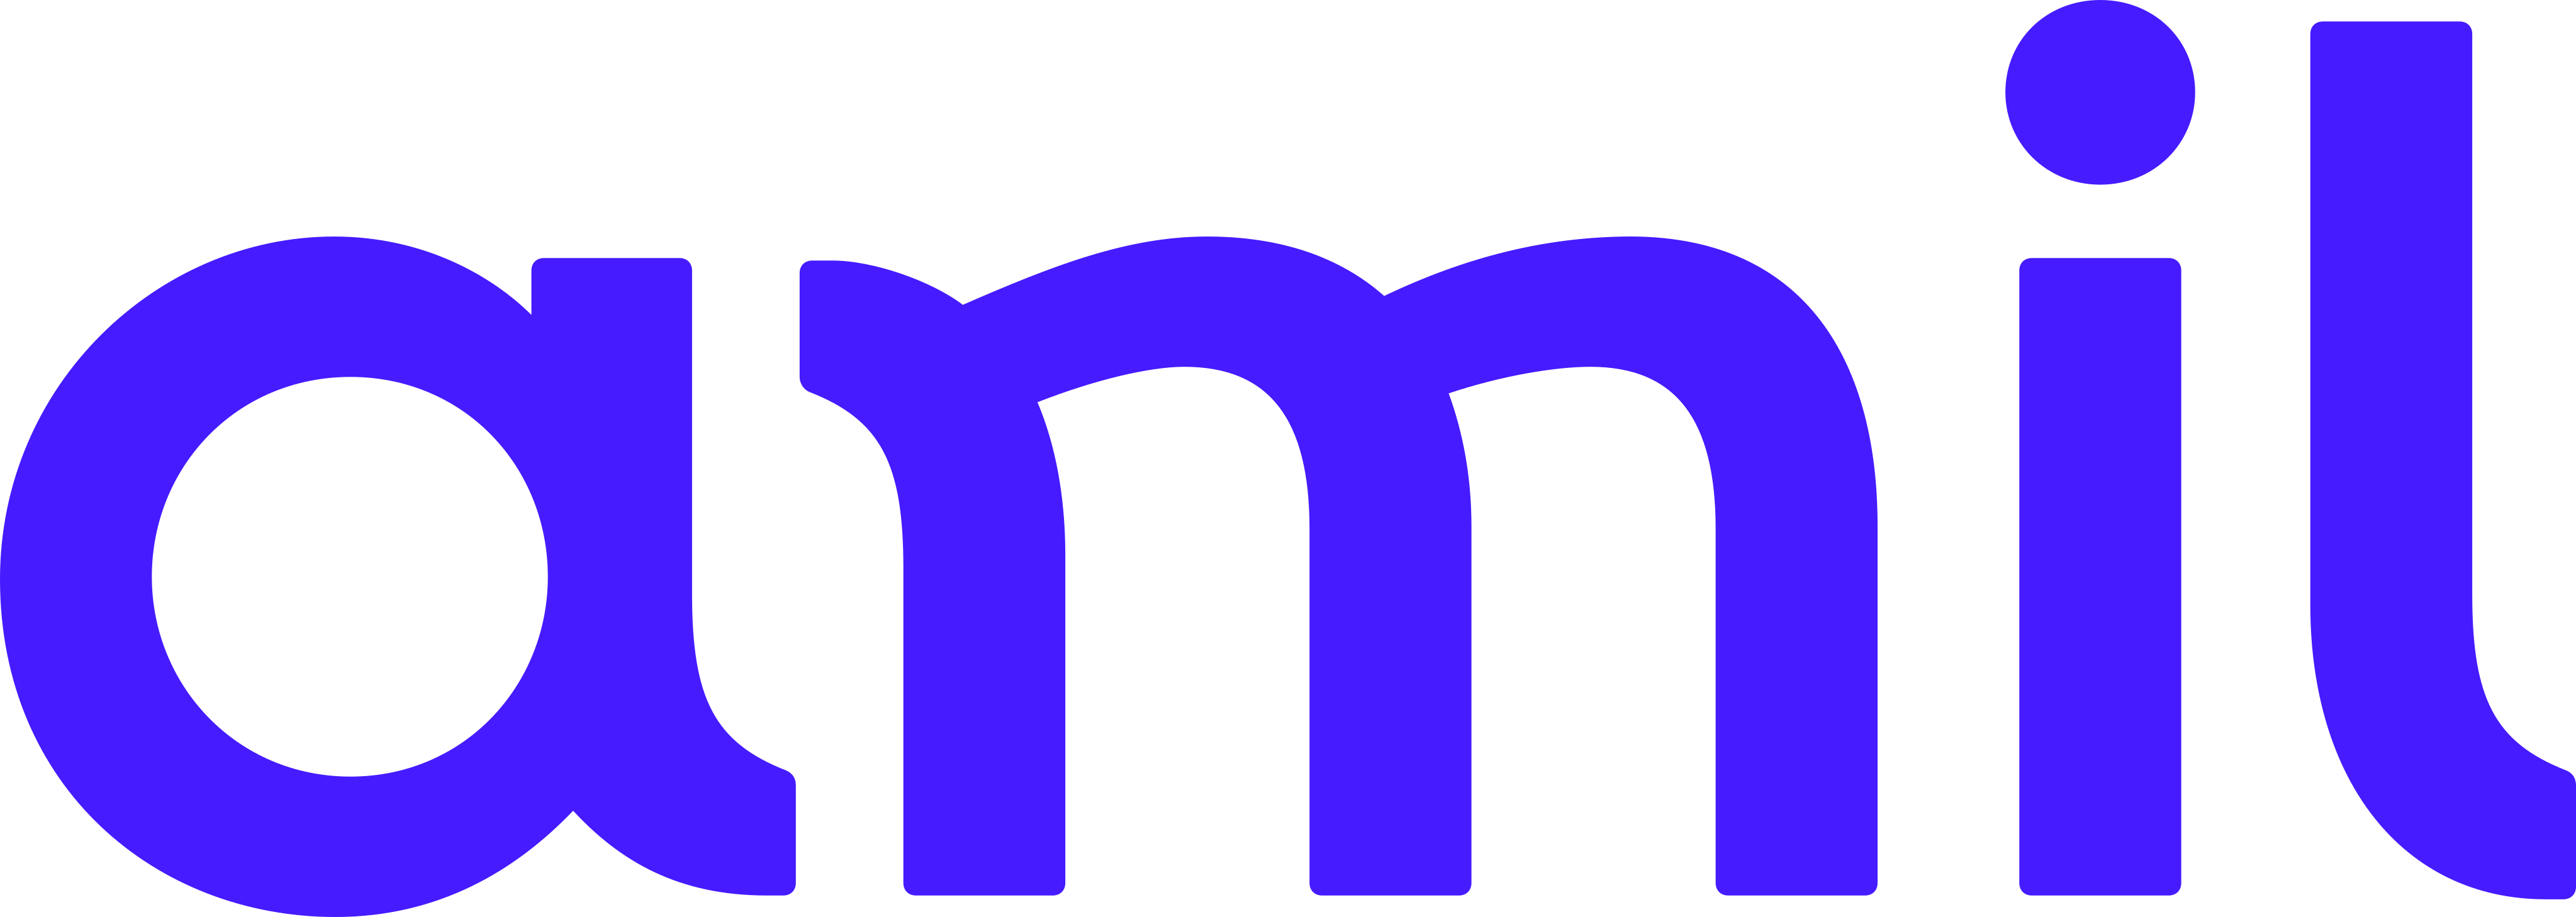 amil logo